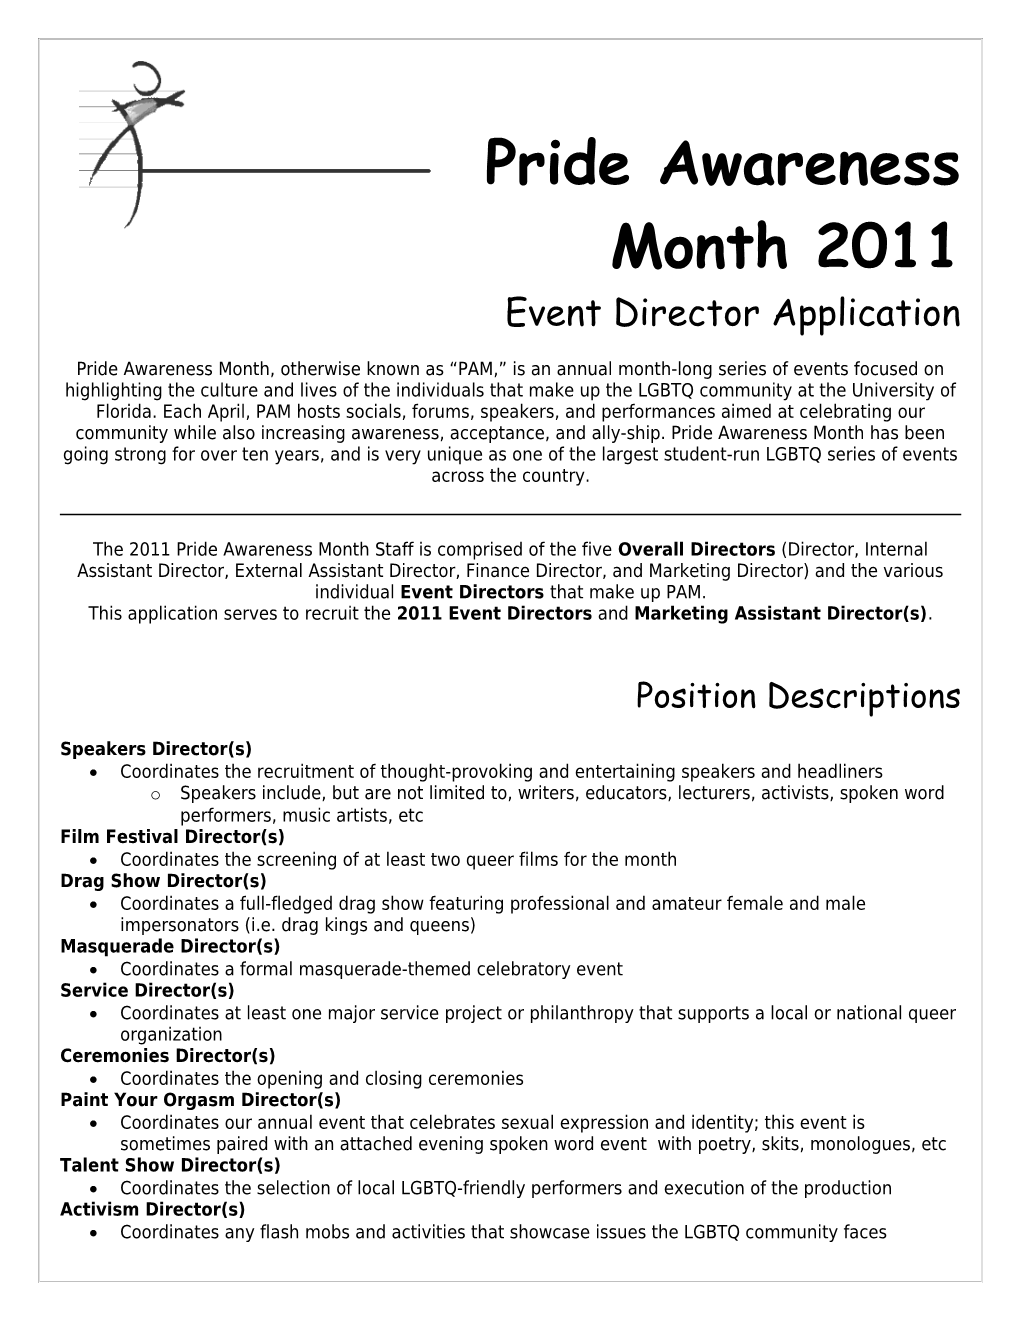 2009 Pride Awareness Month Director Applications